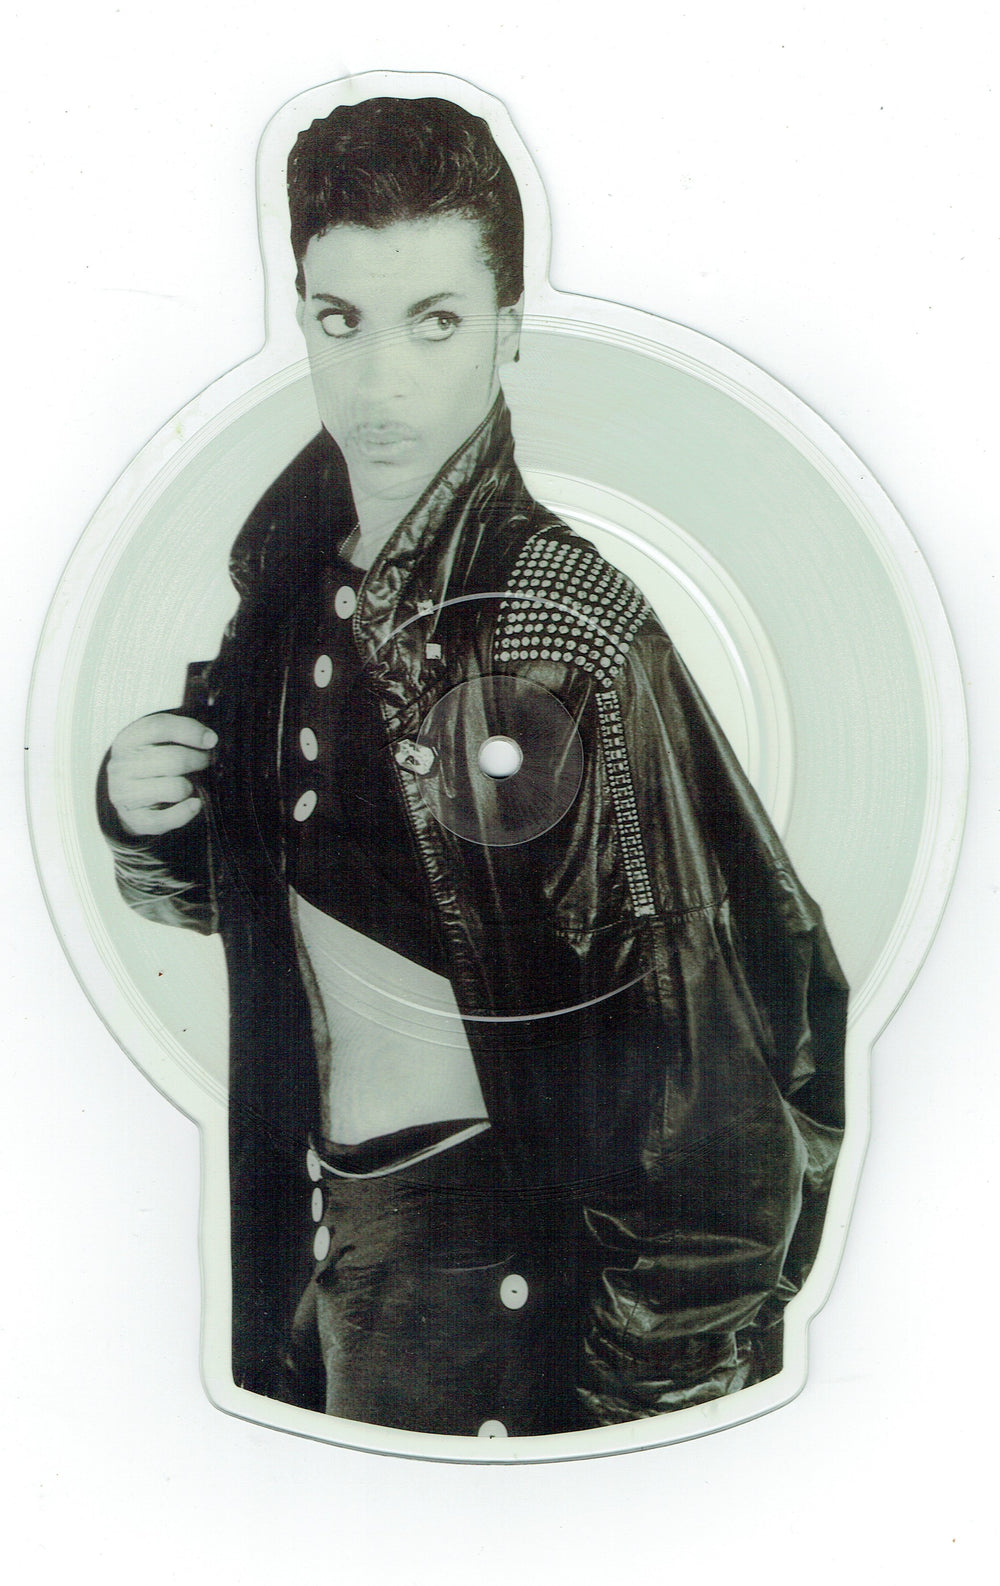 Prince – & The Revolution - KISS Vinyl 7" Shape PD UK Preloved: 1986